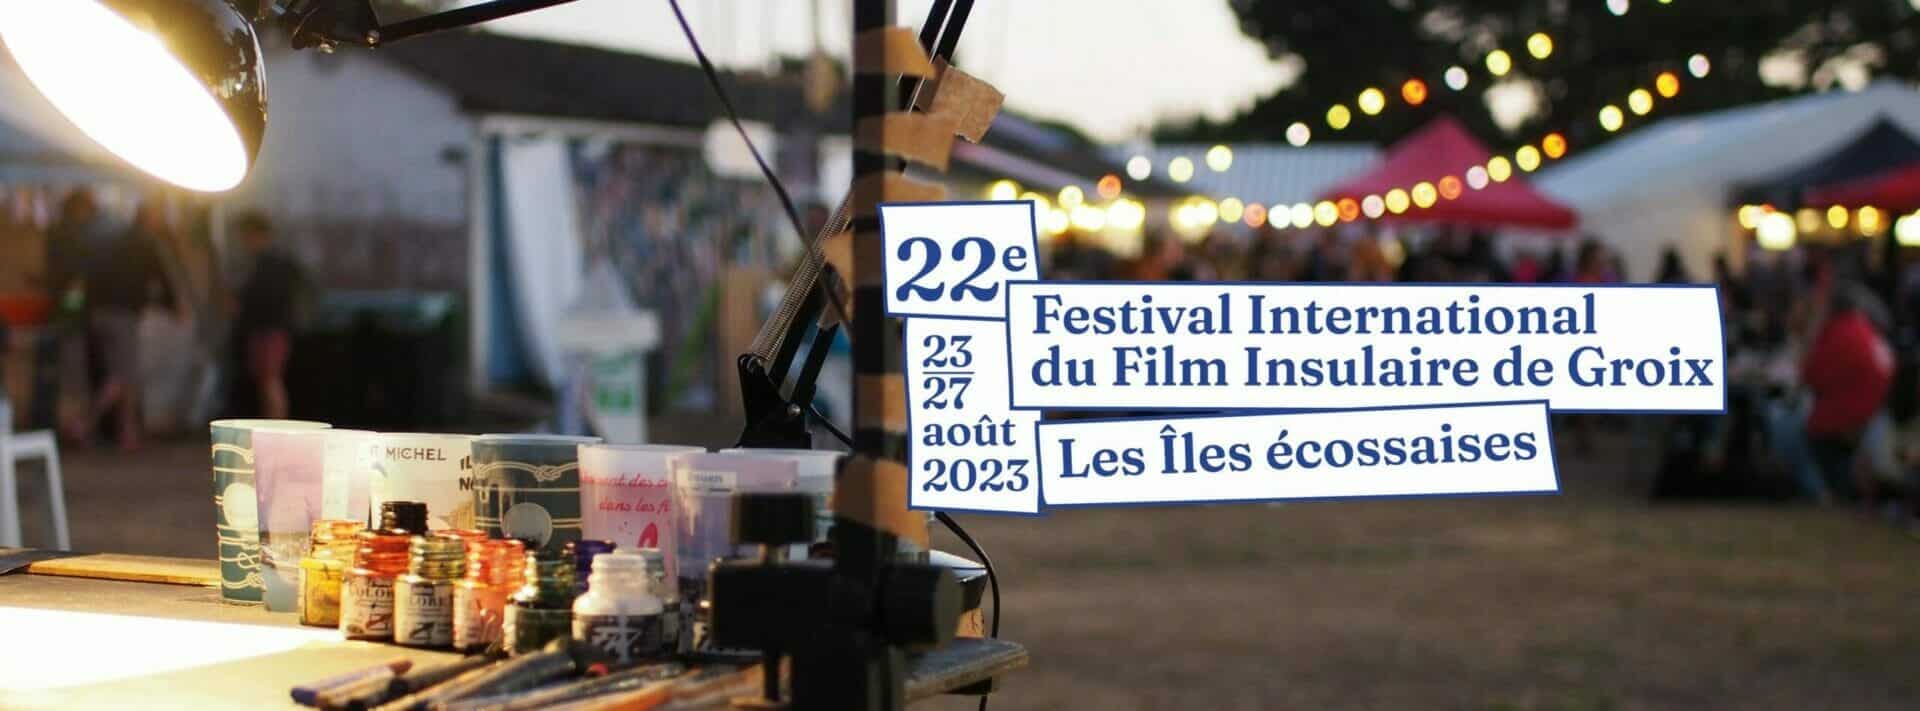 FIFIG, Festival international du film insulaire de Groix, du 23 au 27 août 2023